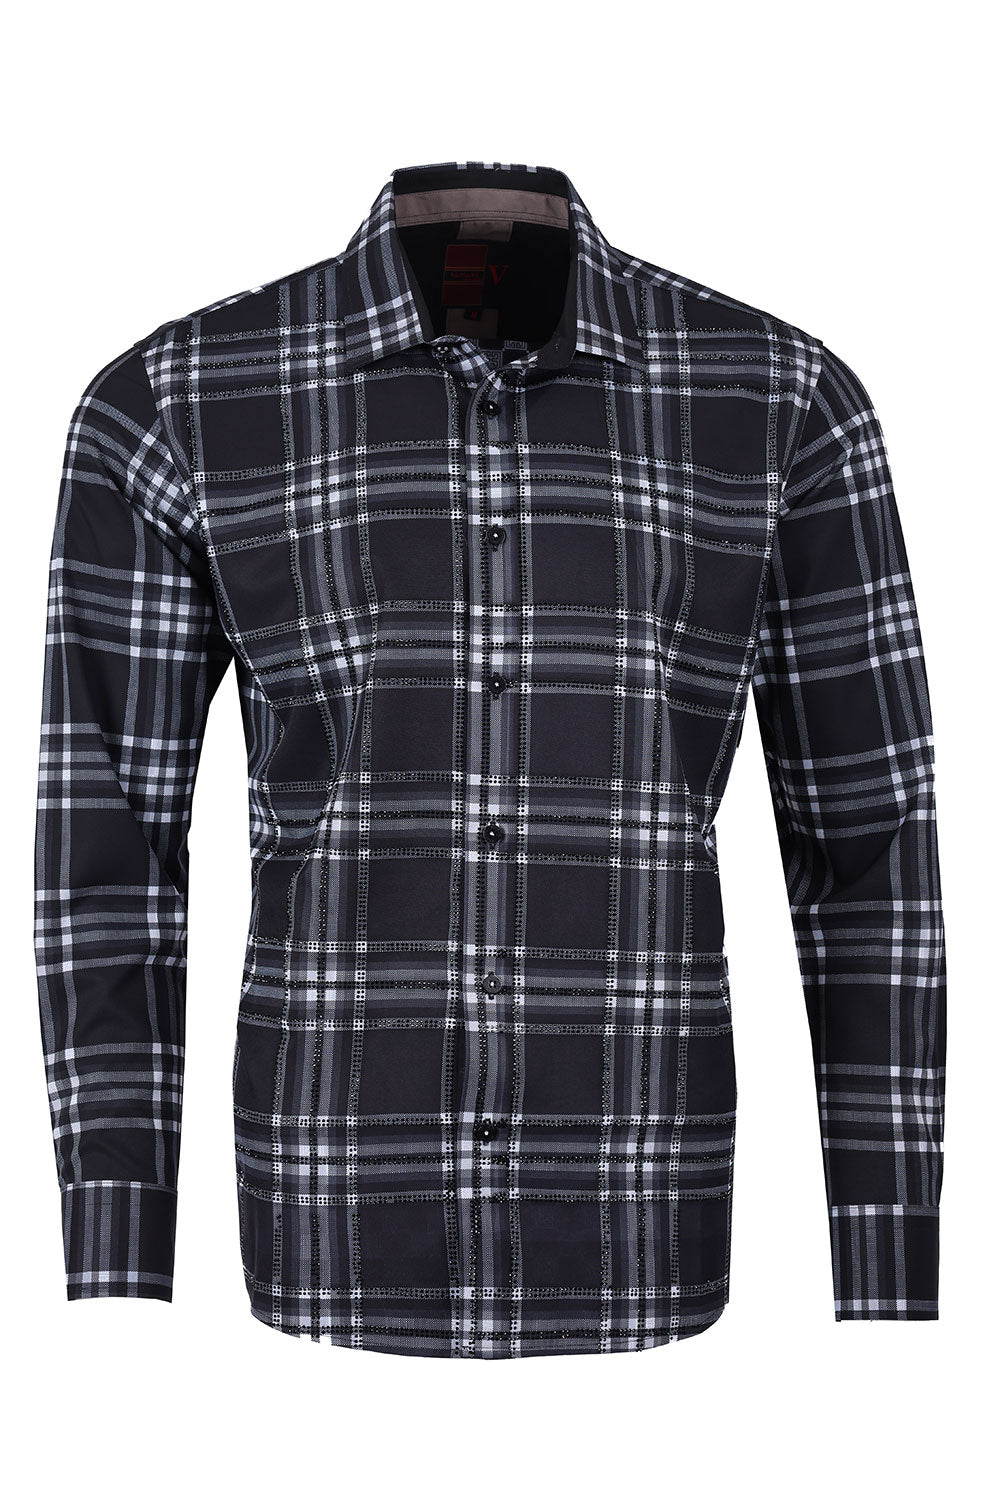 Vassari Men's Printed Checkered Plaid Long Sleeve Shirts 2VSR169